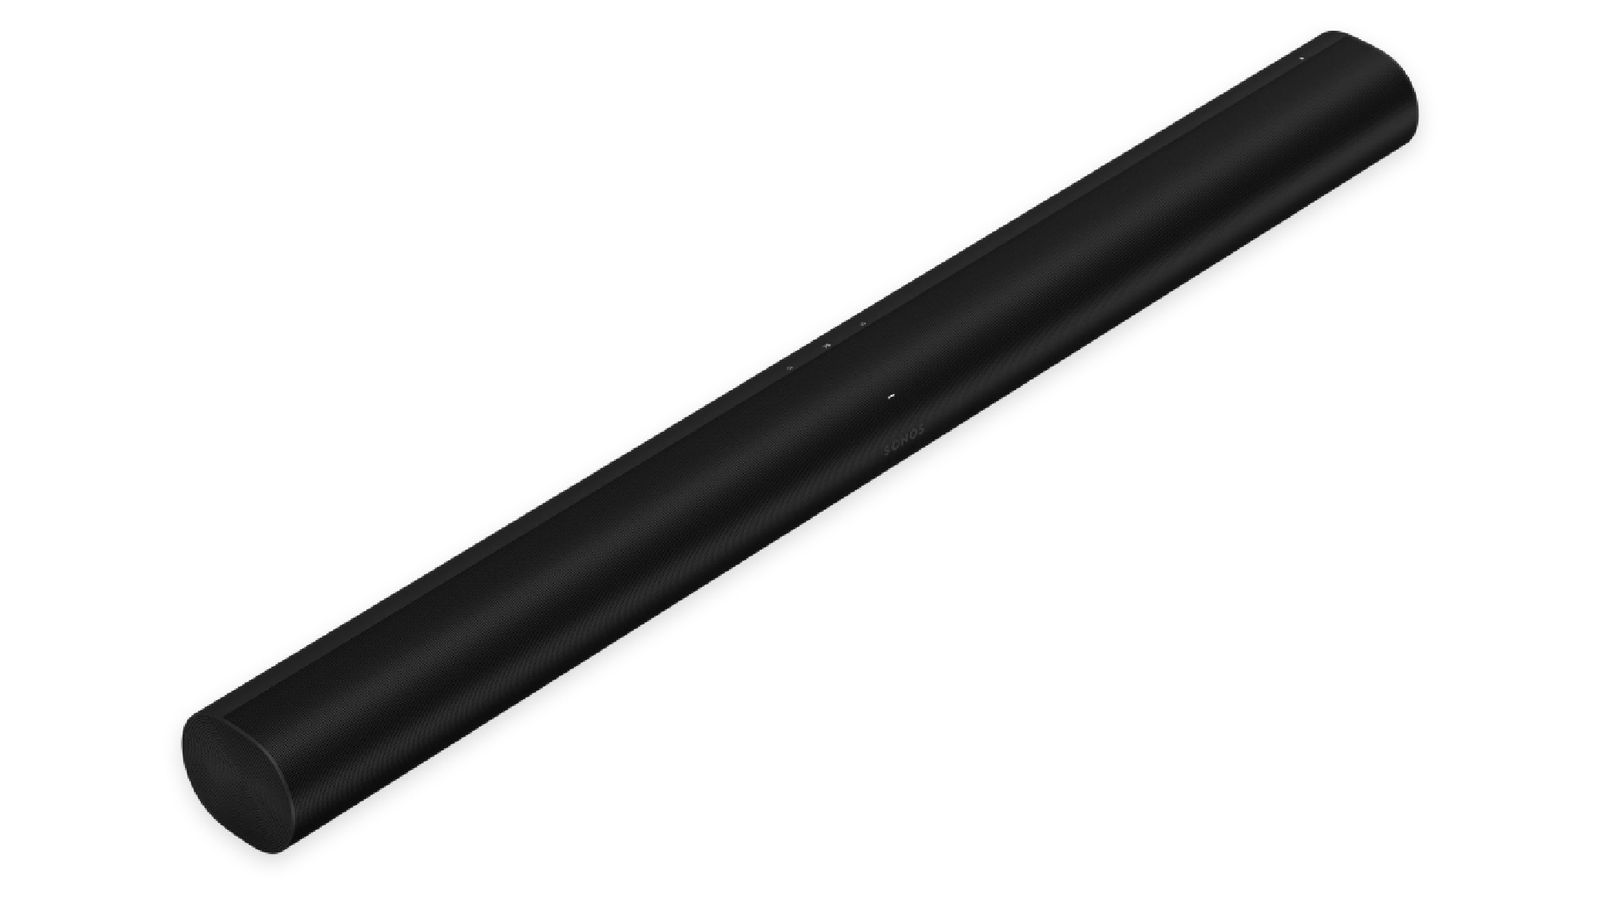 Sonos Arc product image of a long black soundbar.